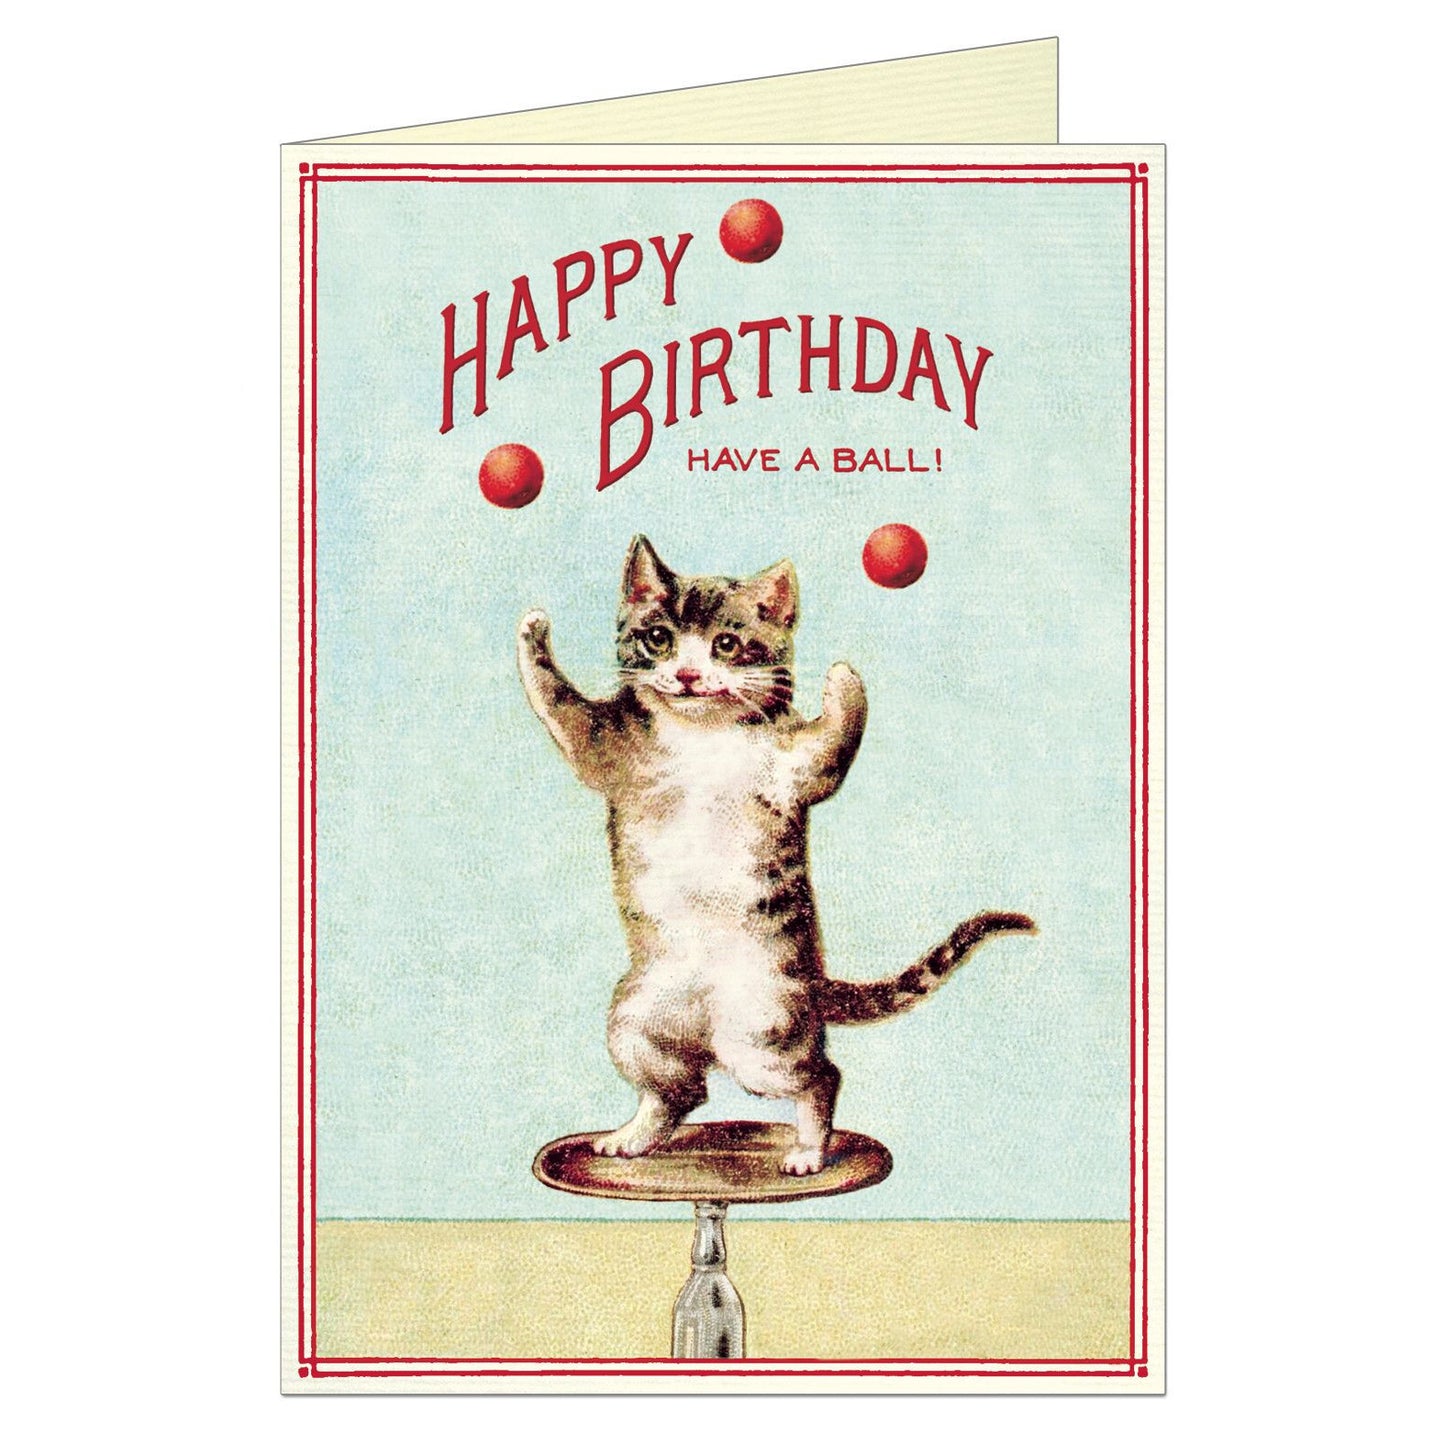 Cavallini & Co. Greeting Card - Happy Birthday Juggling Cat